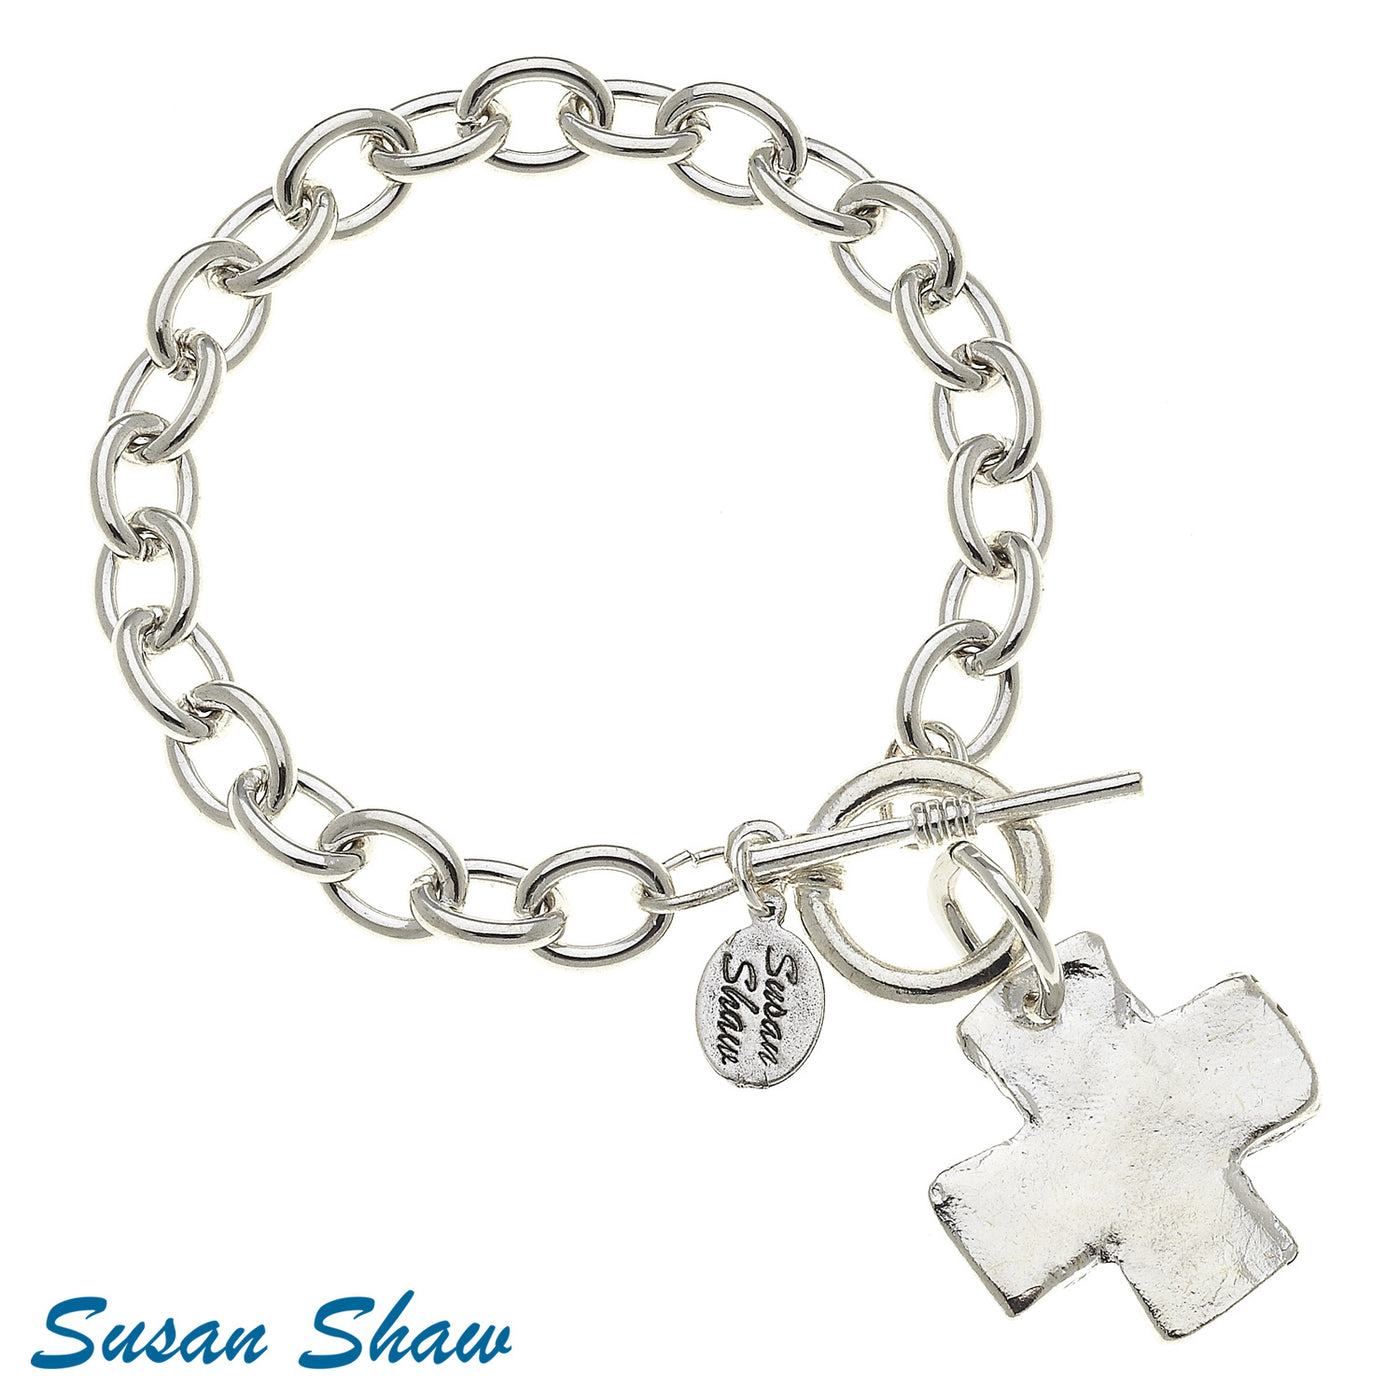 Silver Cross Toggle Bracelet - Susan Shaw